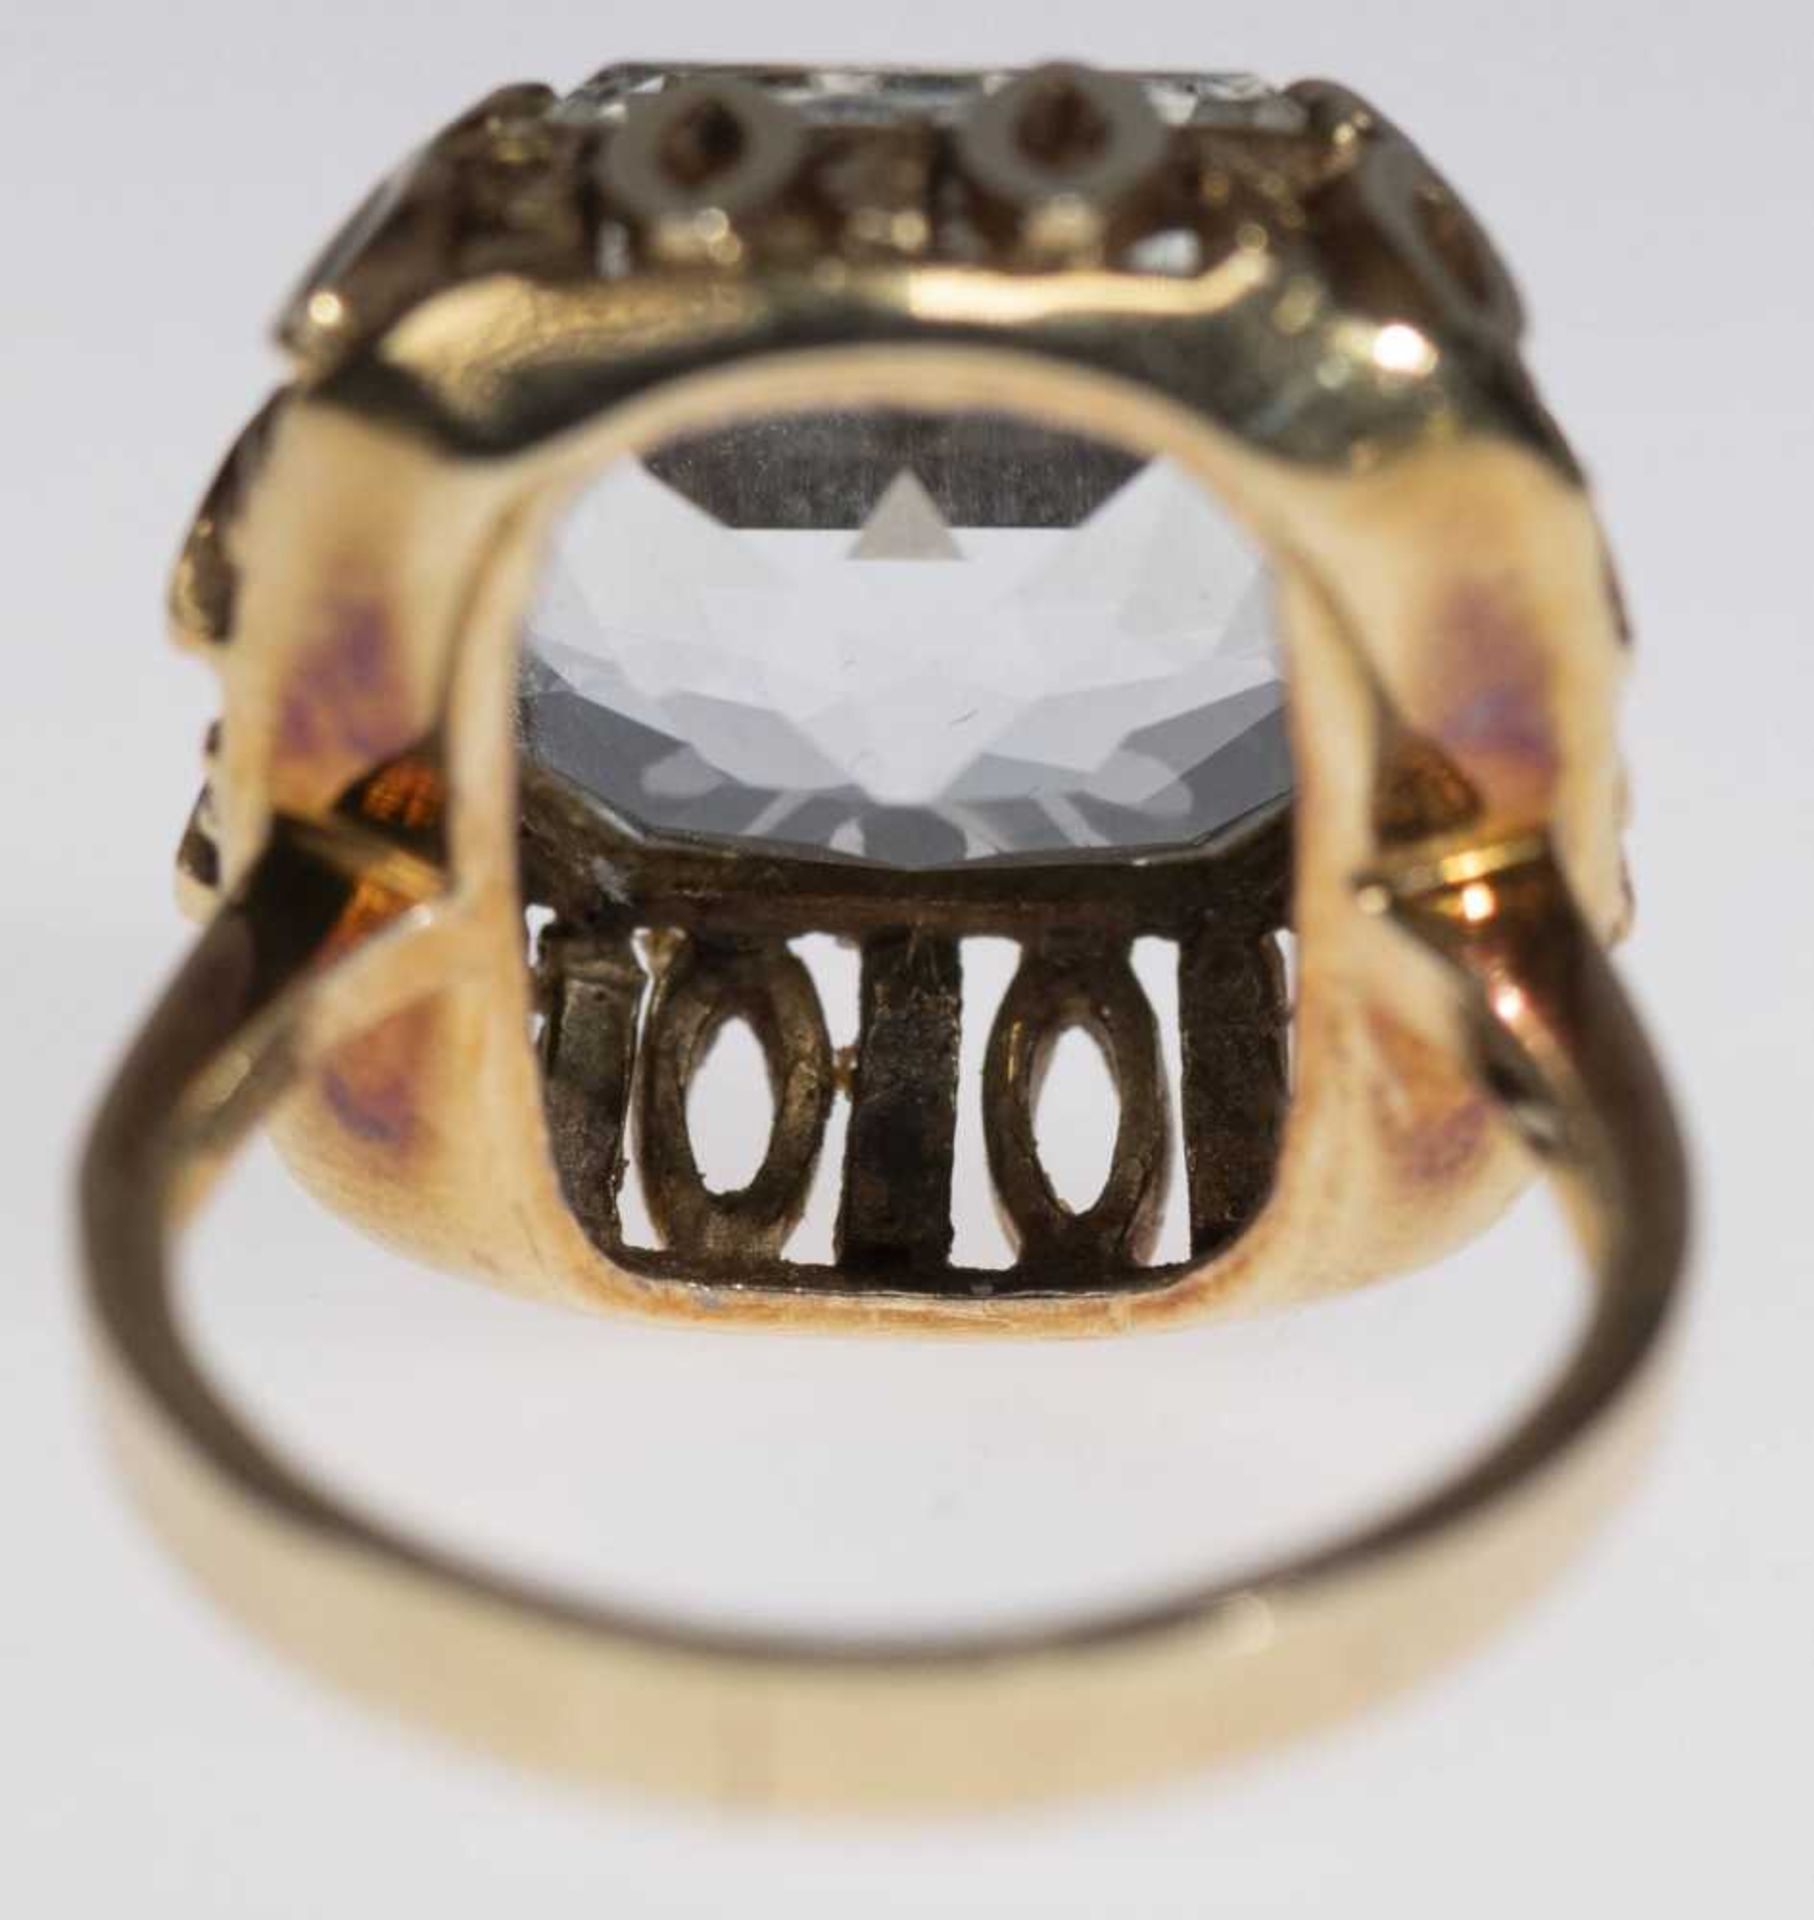 Aquamarines ring, 585 yellow gold, aquamarines in Princess cut approximate 6, 9 ct, goldsmith's work - Image 6 of 6